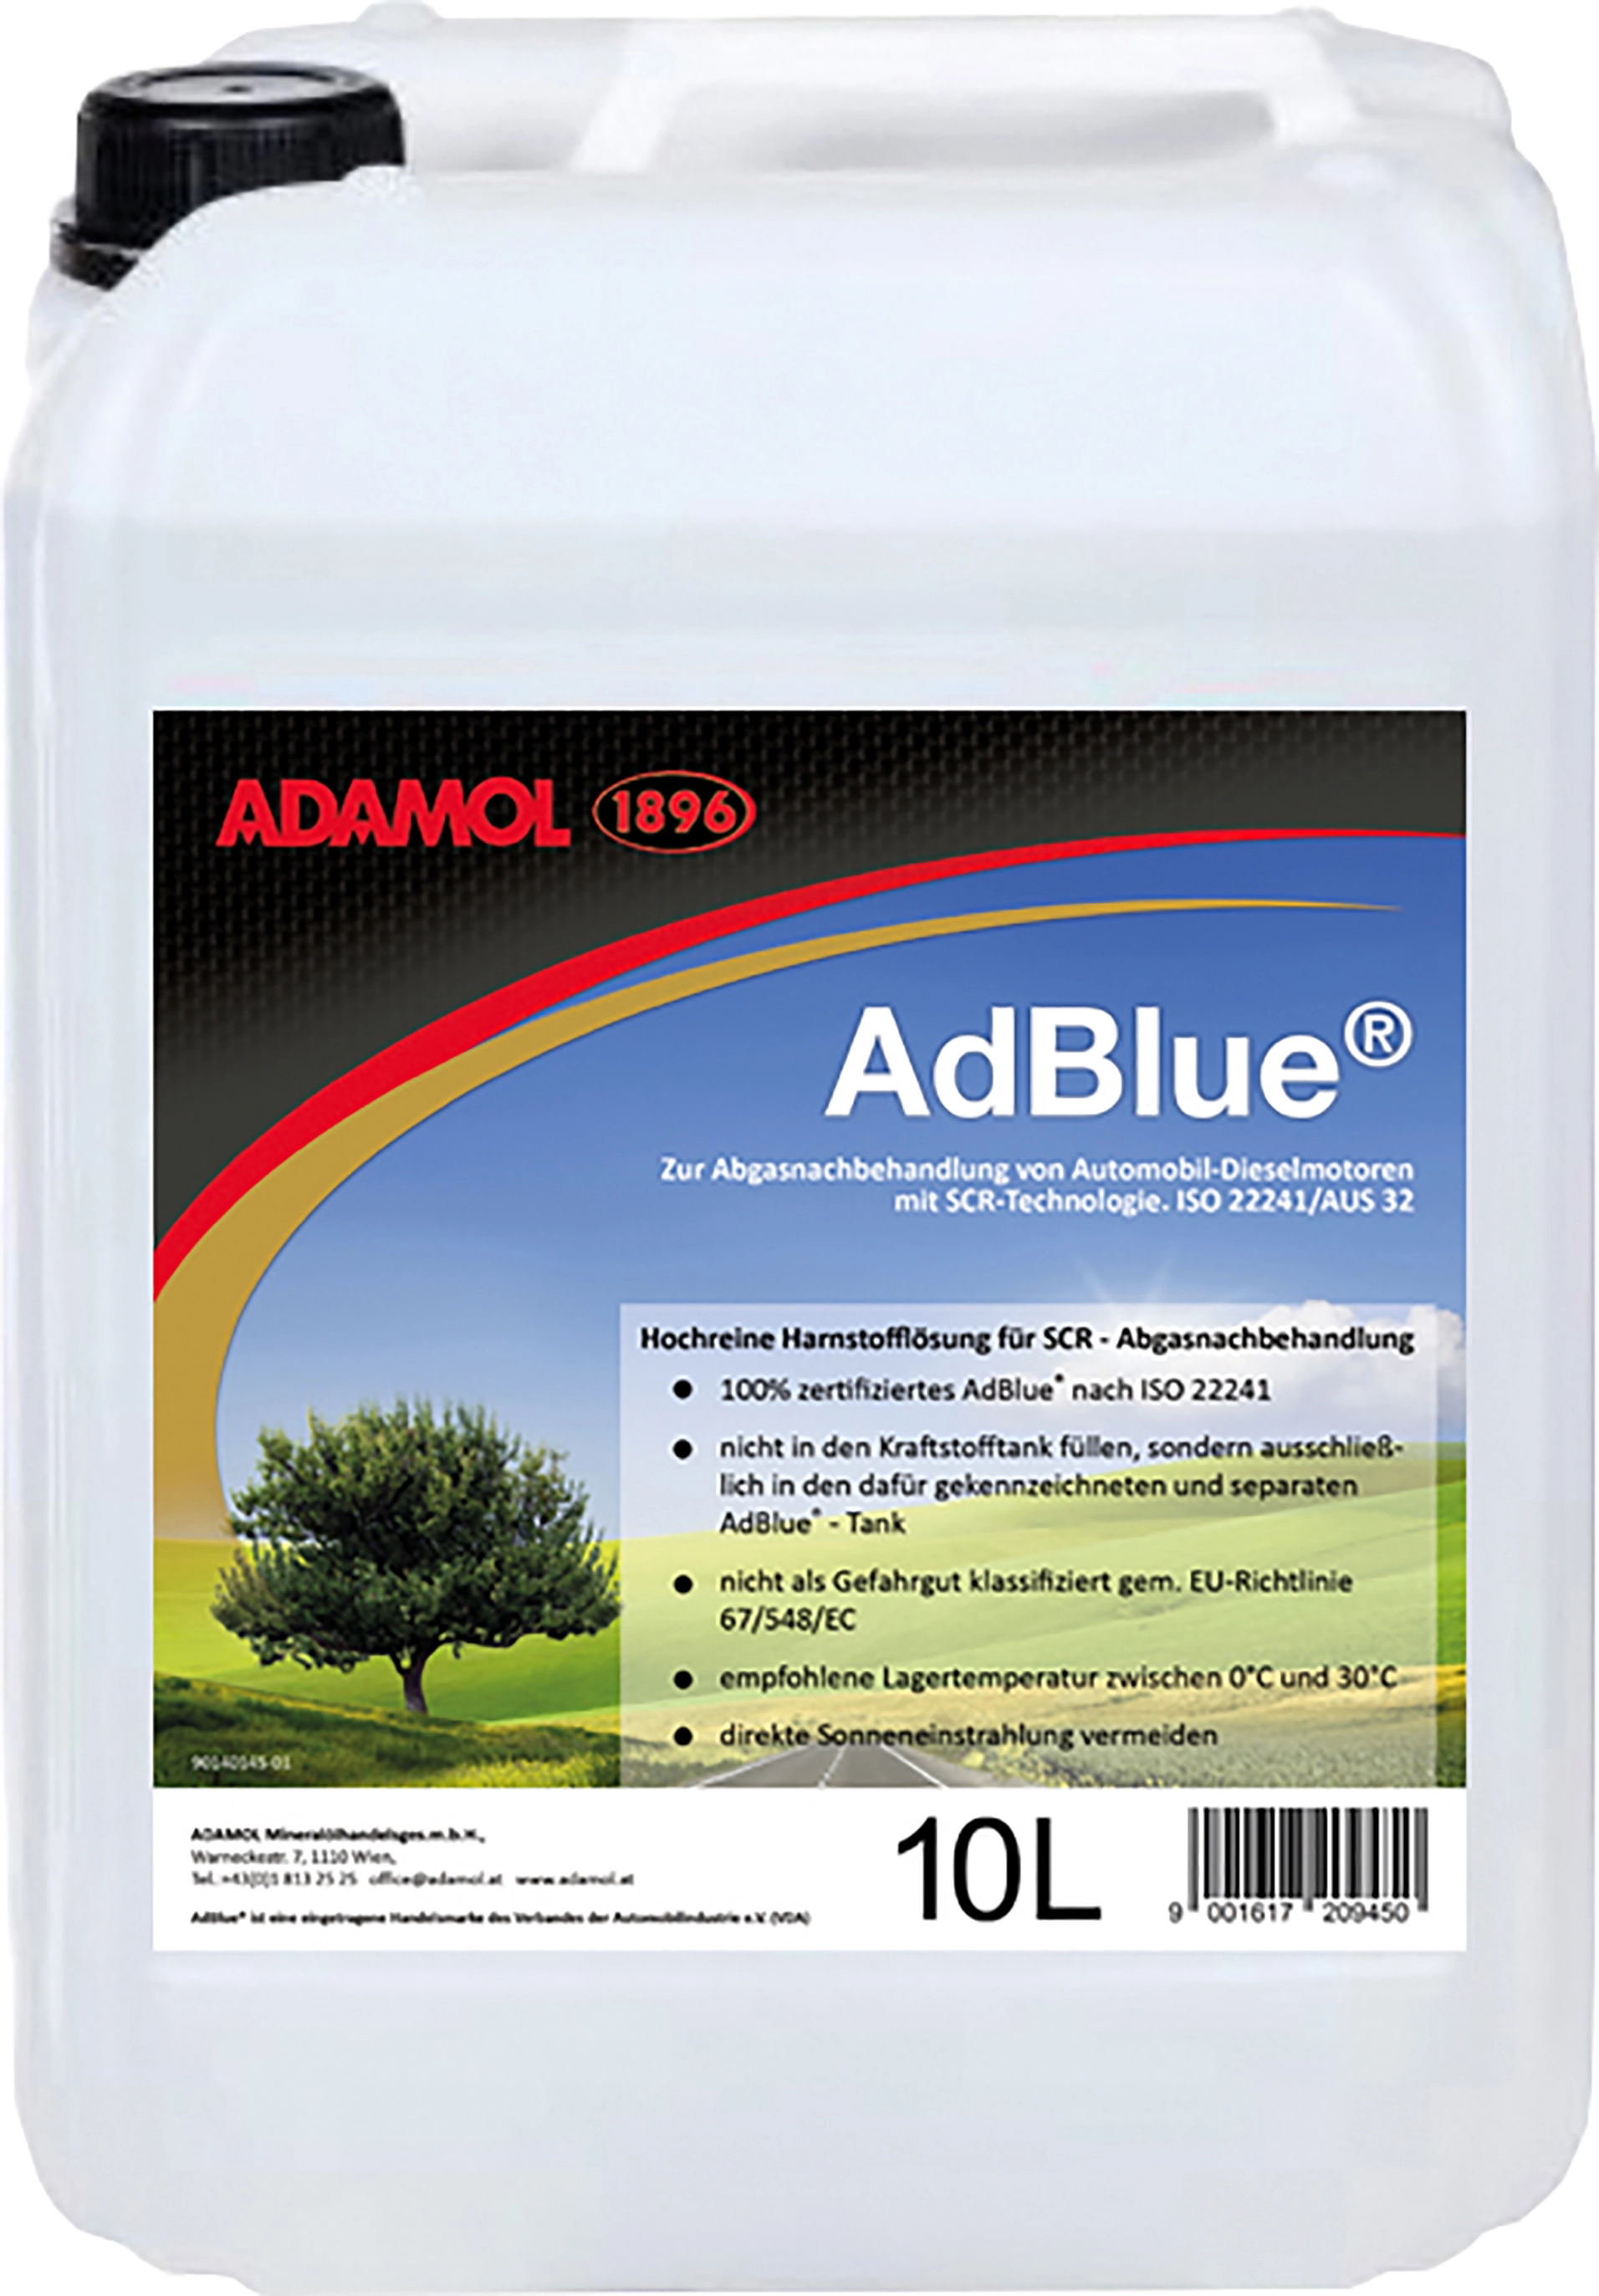 Adamol 1896 Adblue 10 l kaufen bei OBI